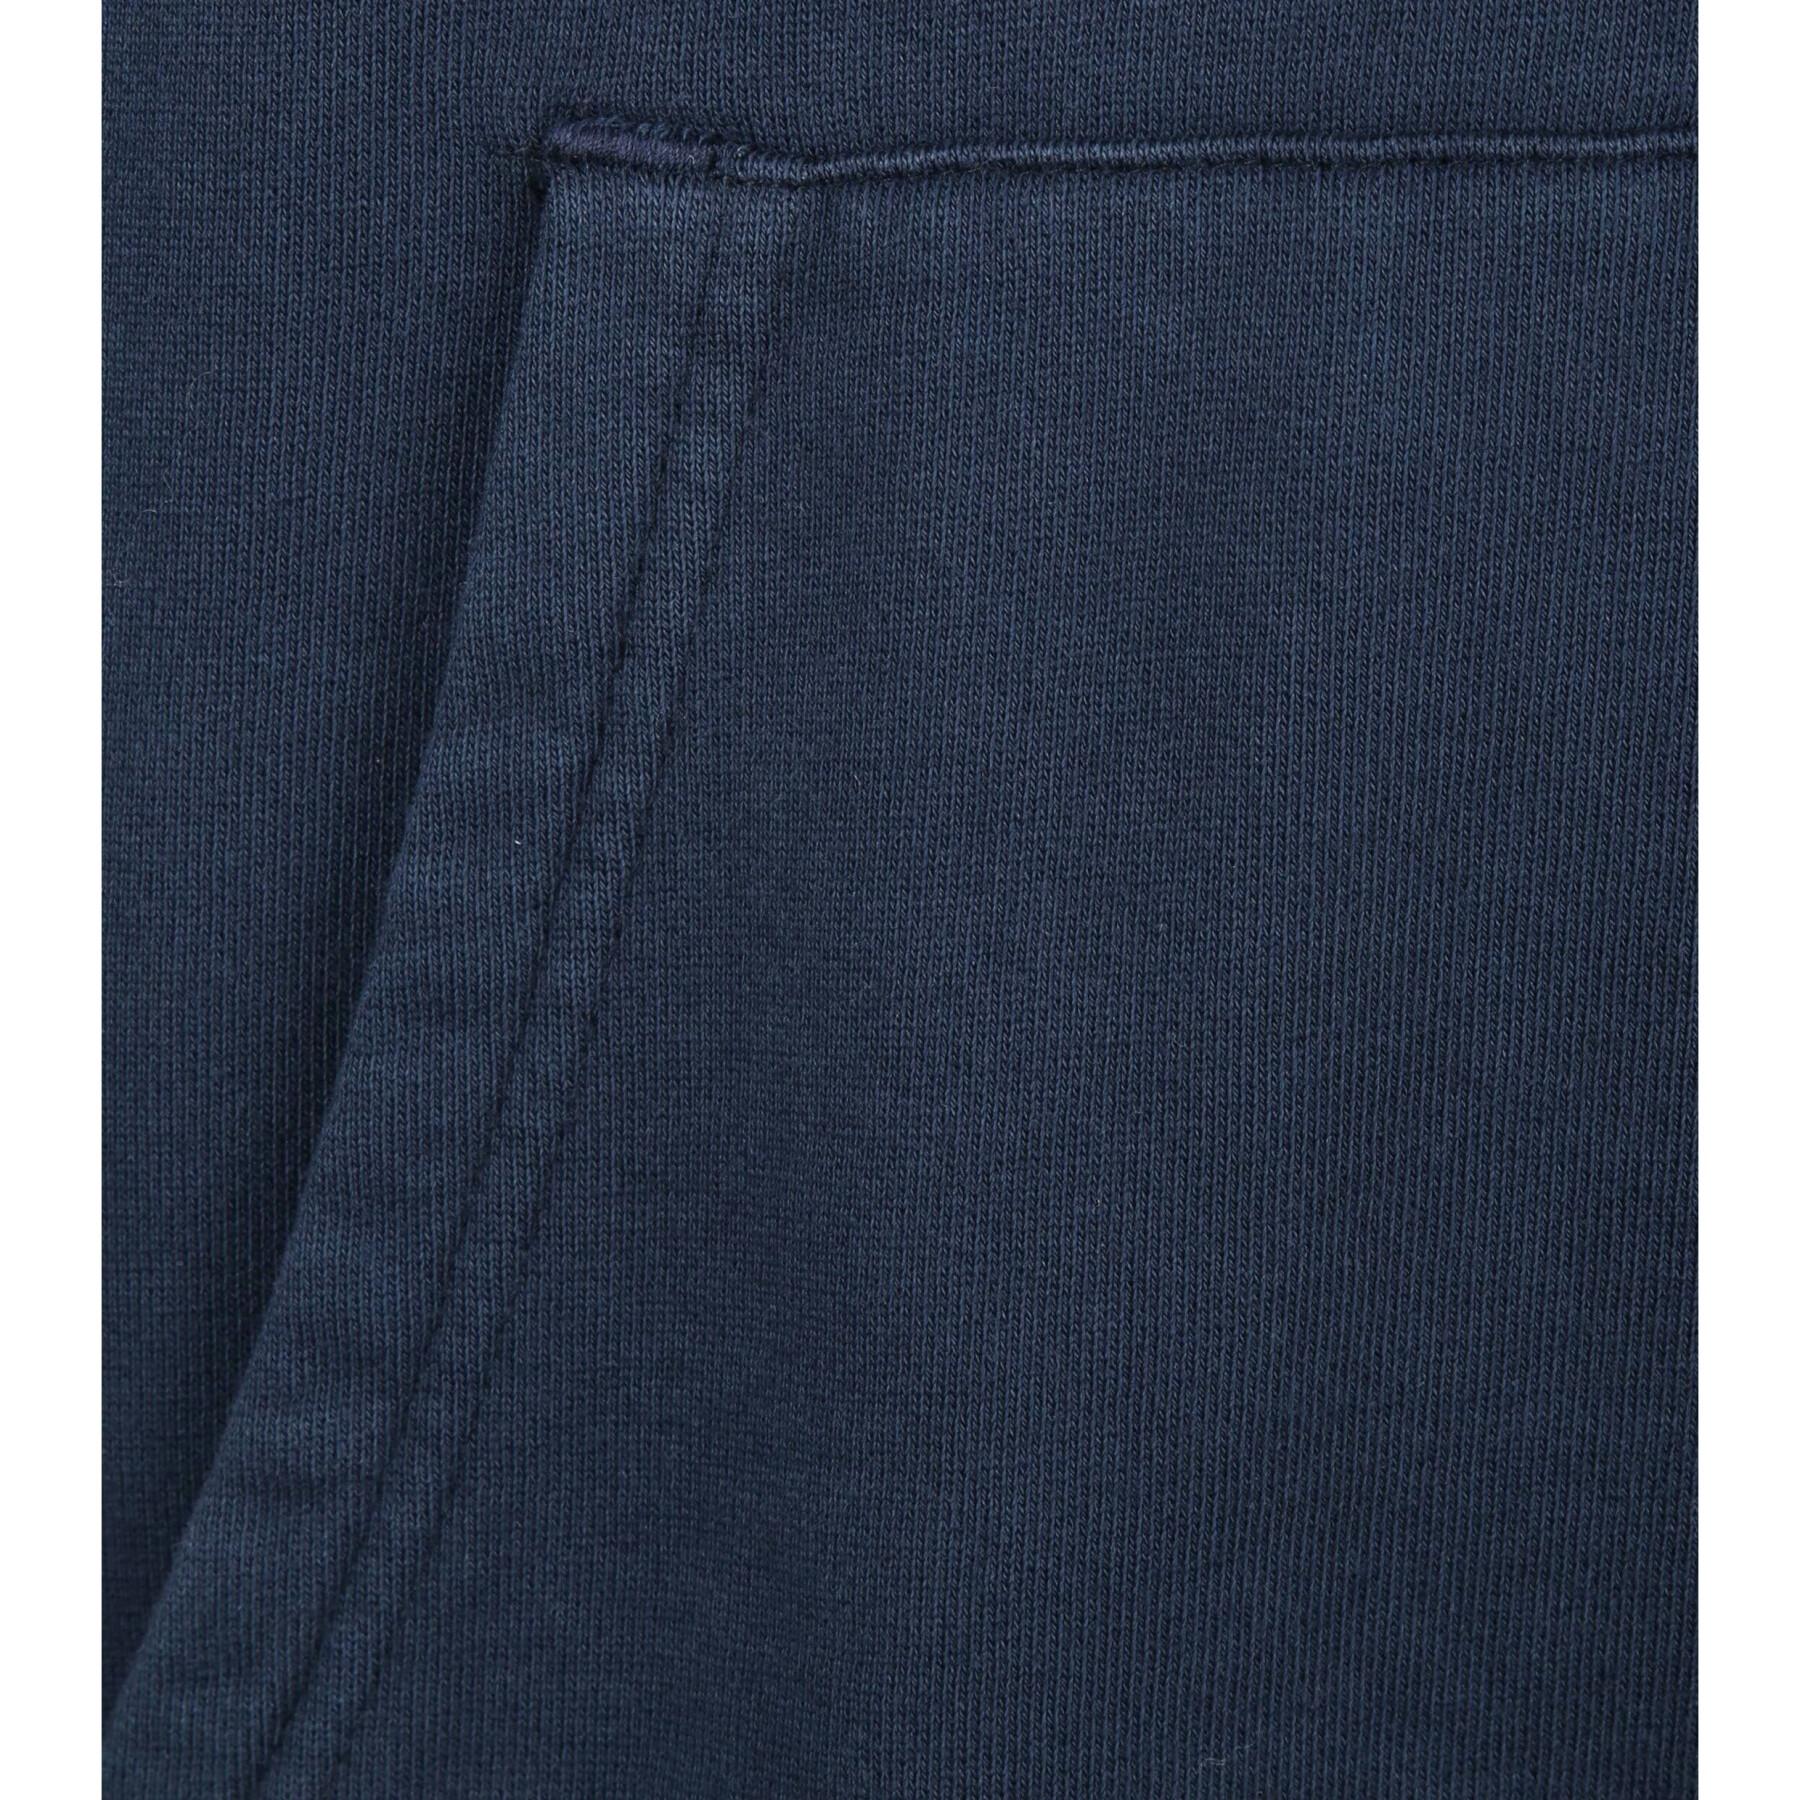 Camisola com capuz Colorful Standard Classic Organic navy blue